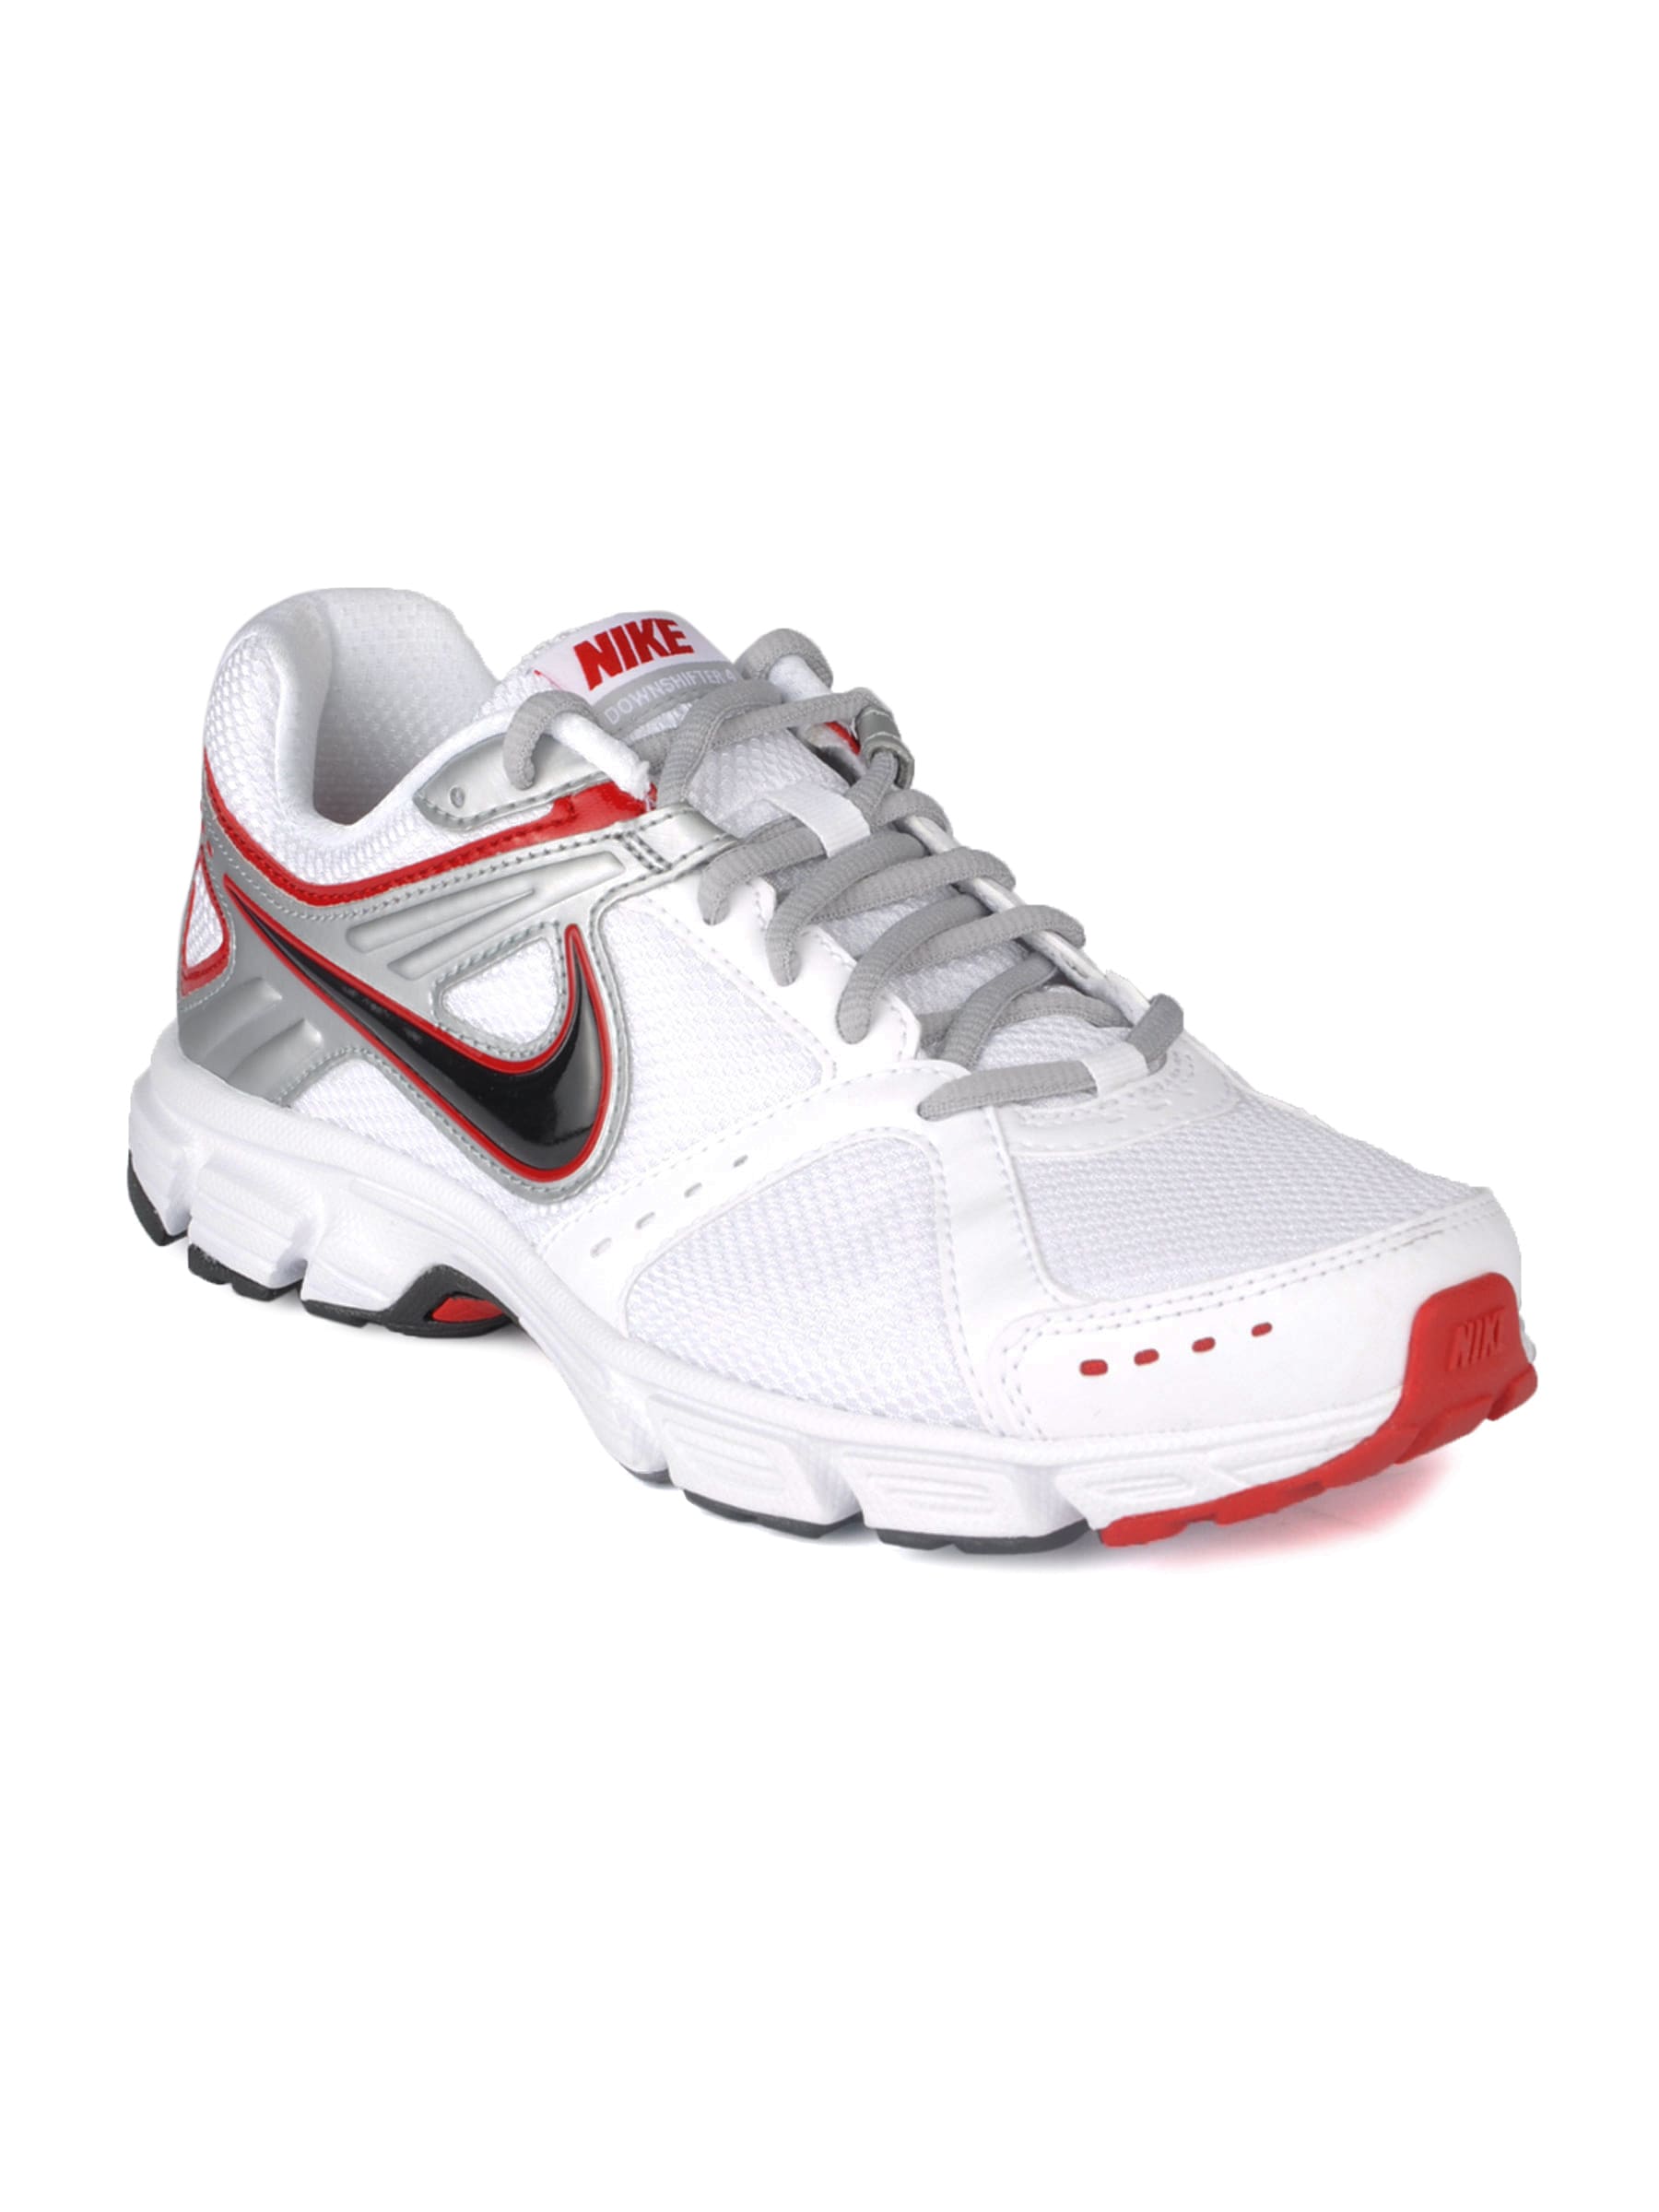 Nike Men Downshifter 4 MSL White Sports Shoes